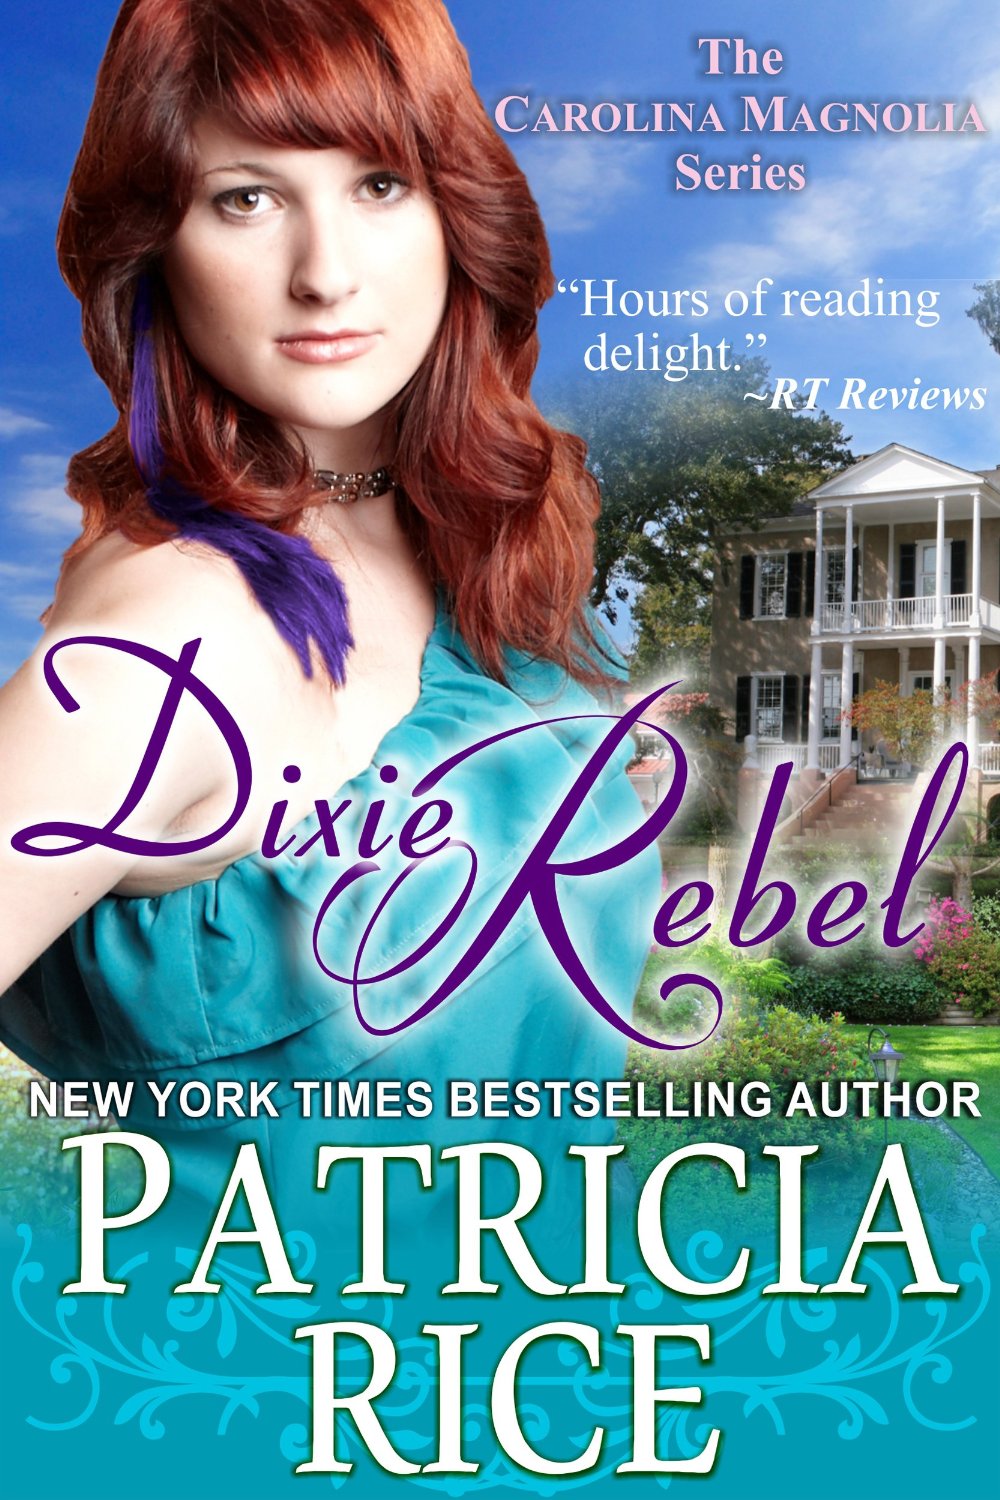 Dixie Rebel (The Carolina Magnolia Series, Book 1) by Patricia Rice